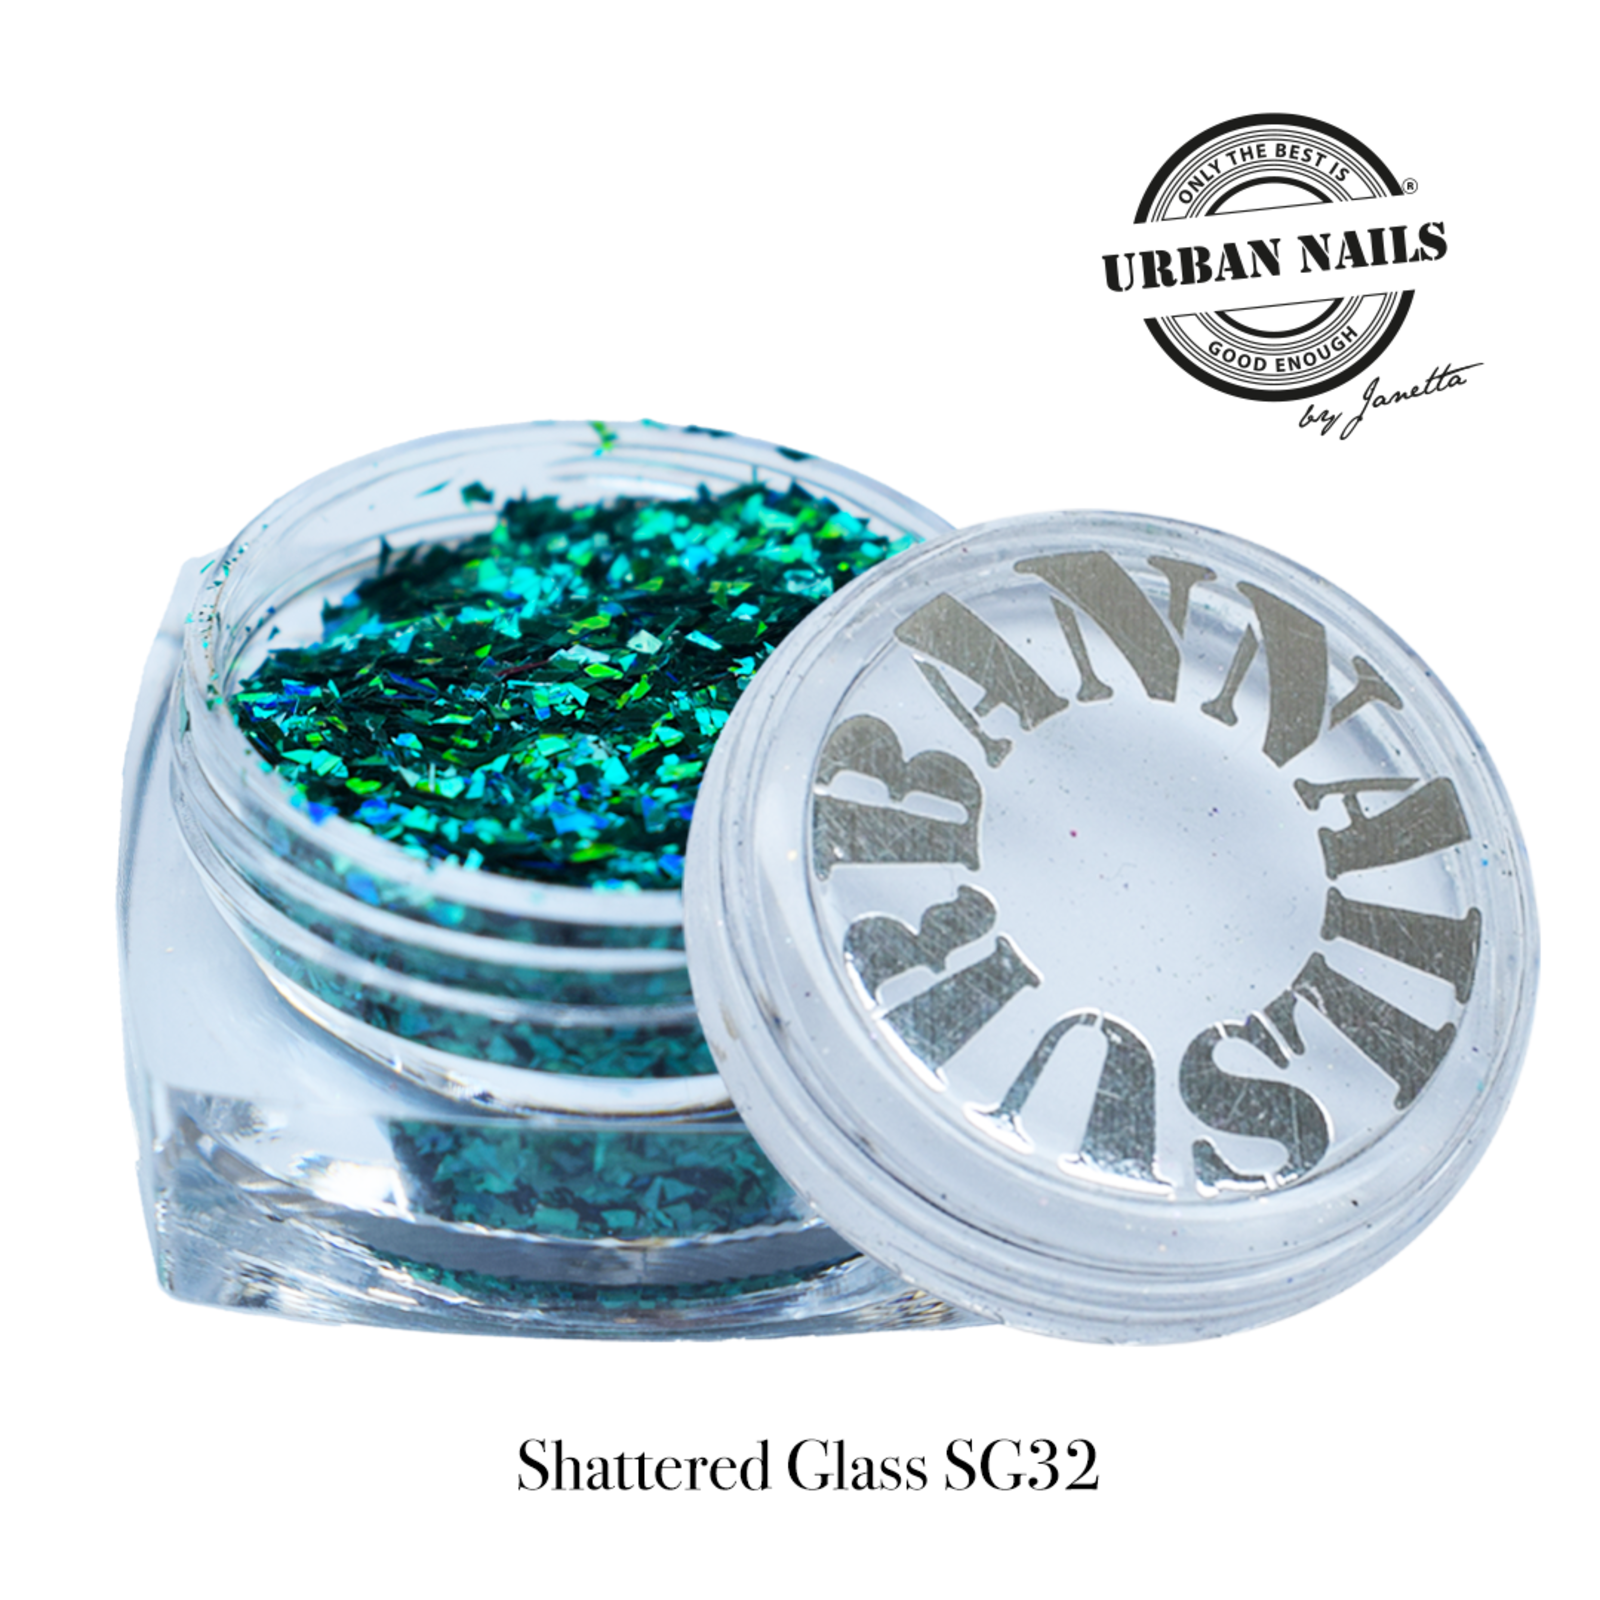 Urban nails Shattered Glass SG32 hologram appelblauw zeegroen